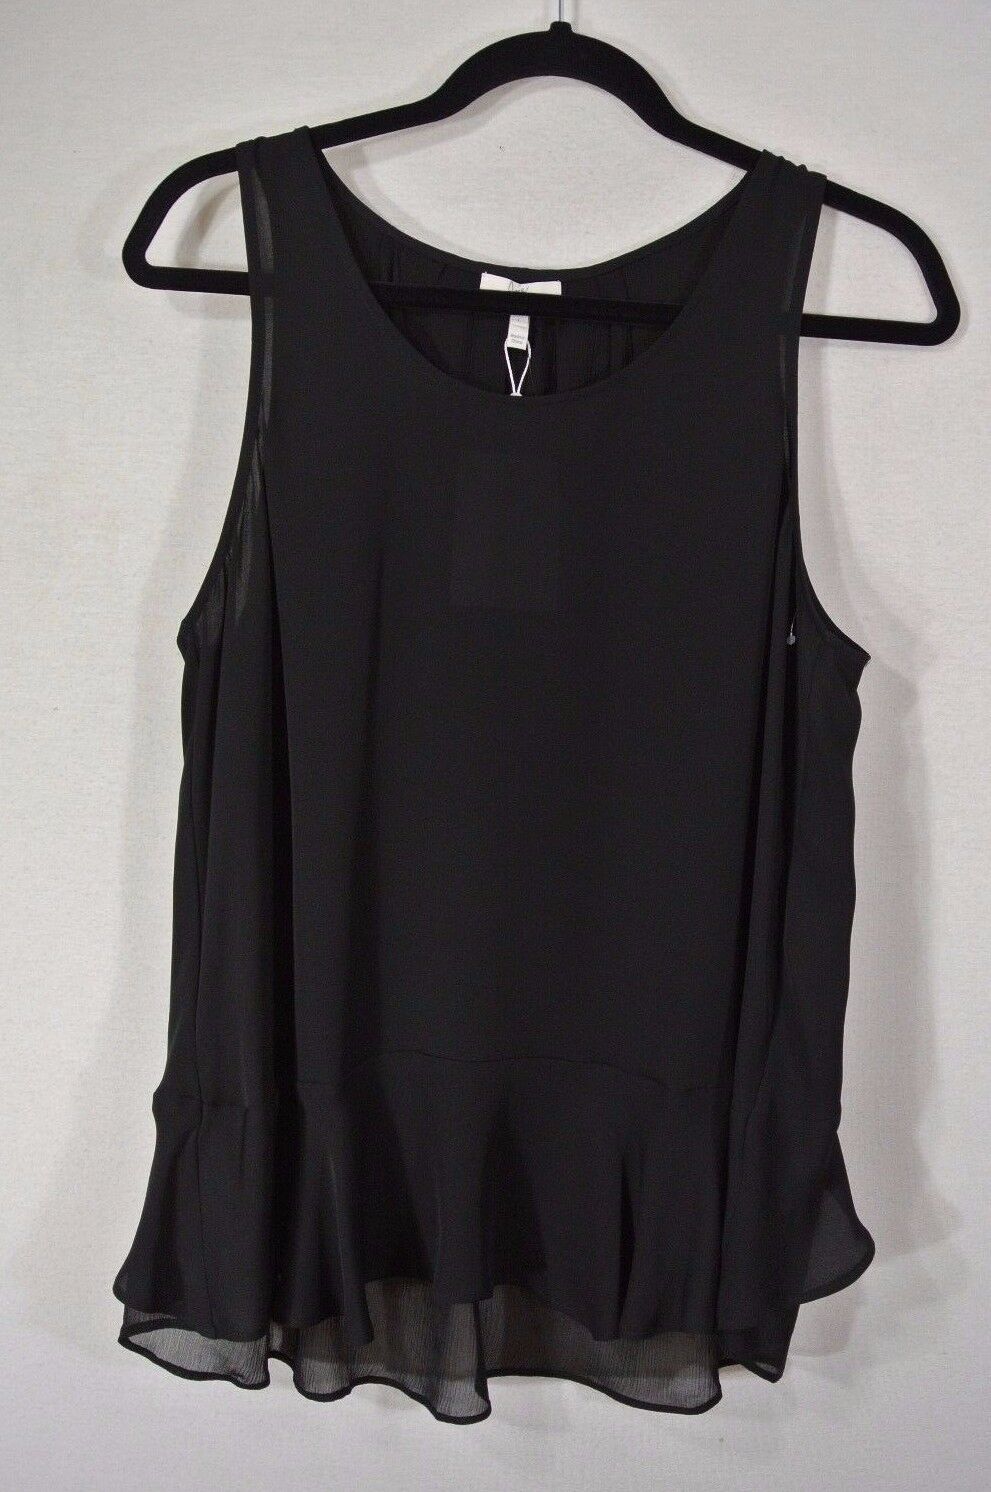 NEW Joie Black Micha Silk Top- M $238 #T605 | eBay